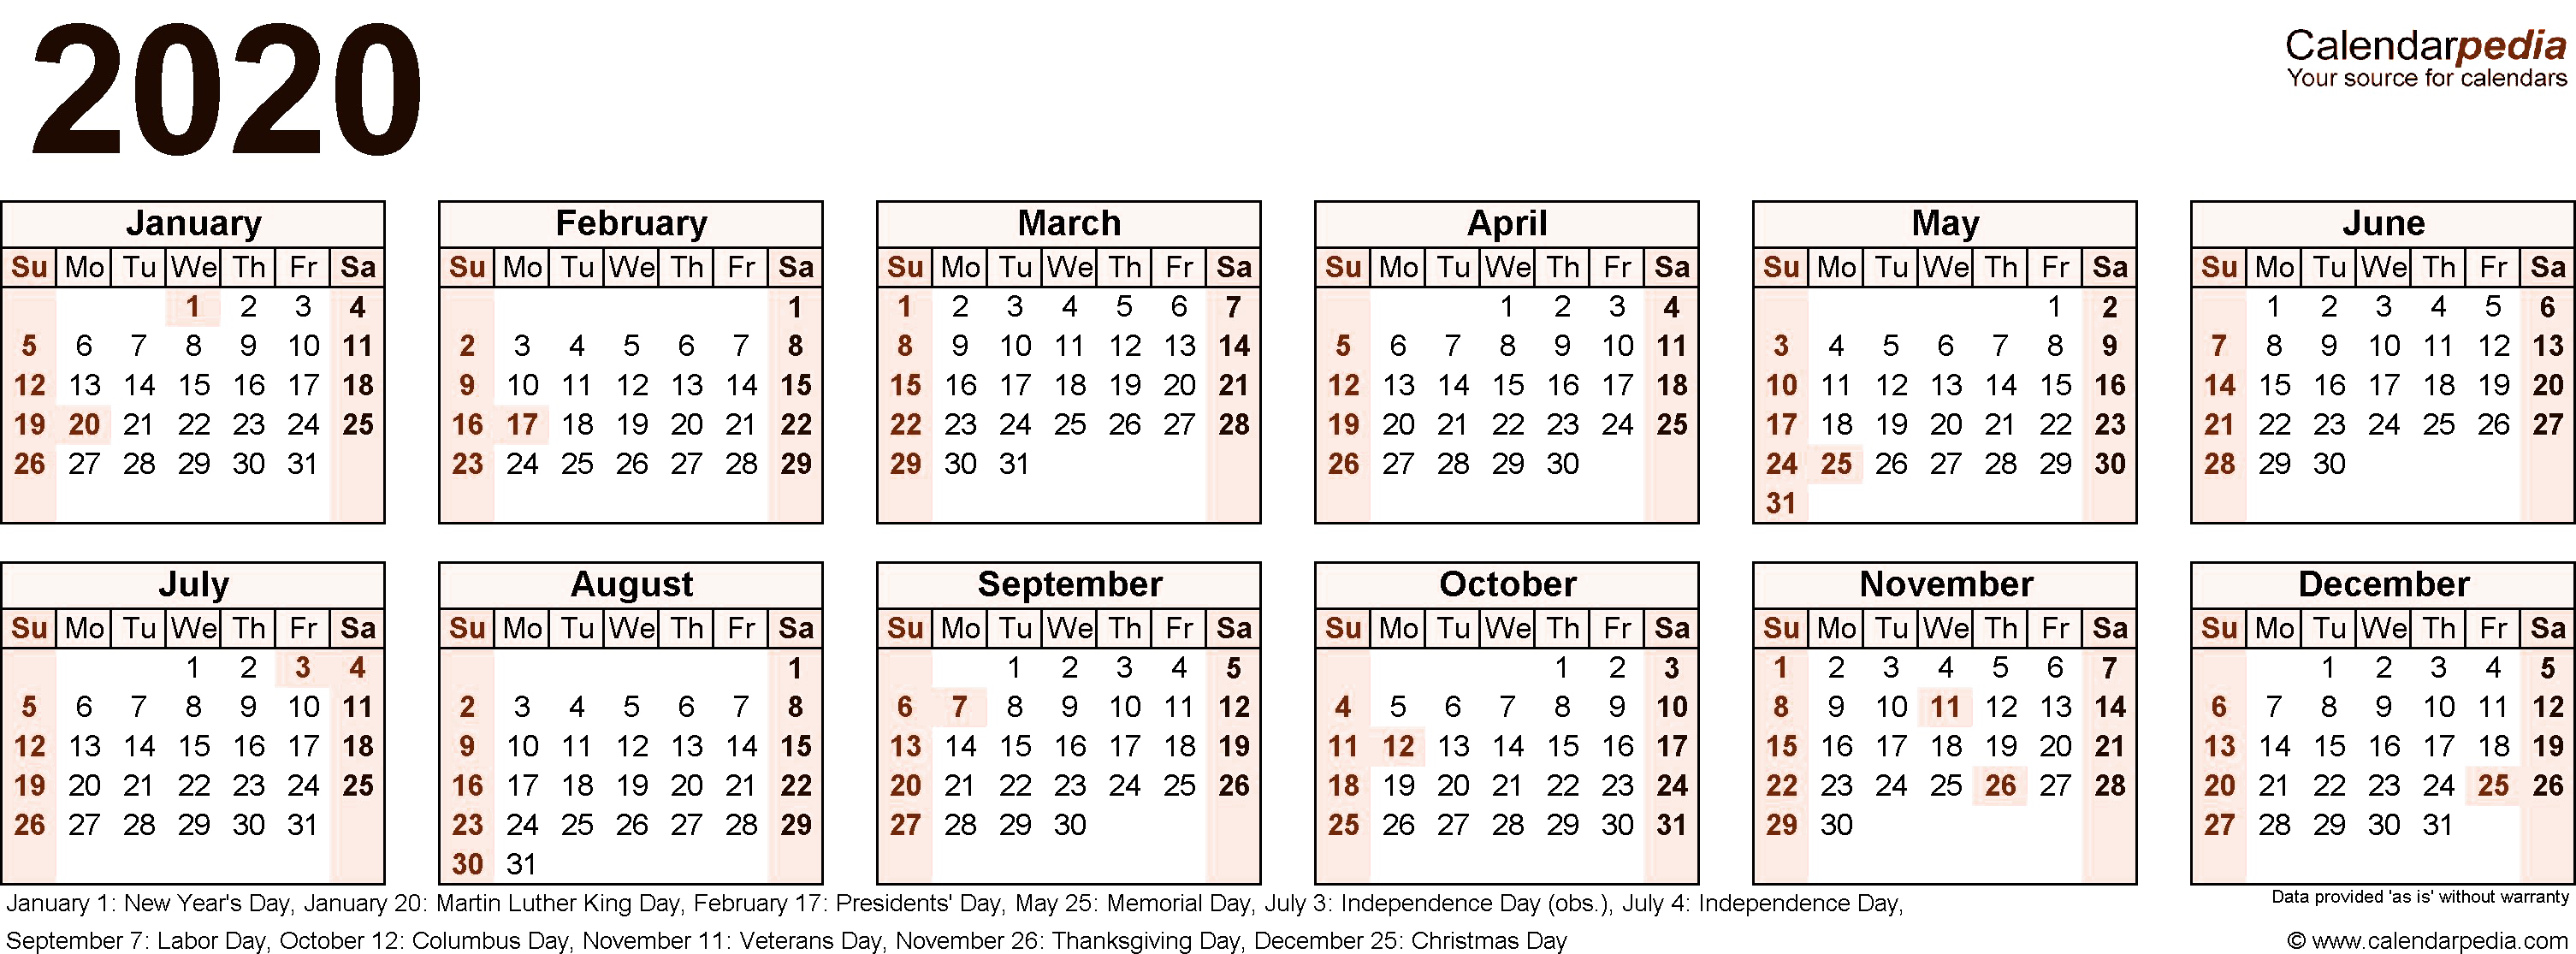 Imagen Transparente del calendario 2020